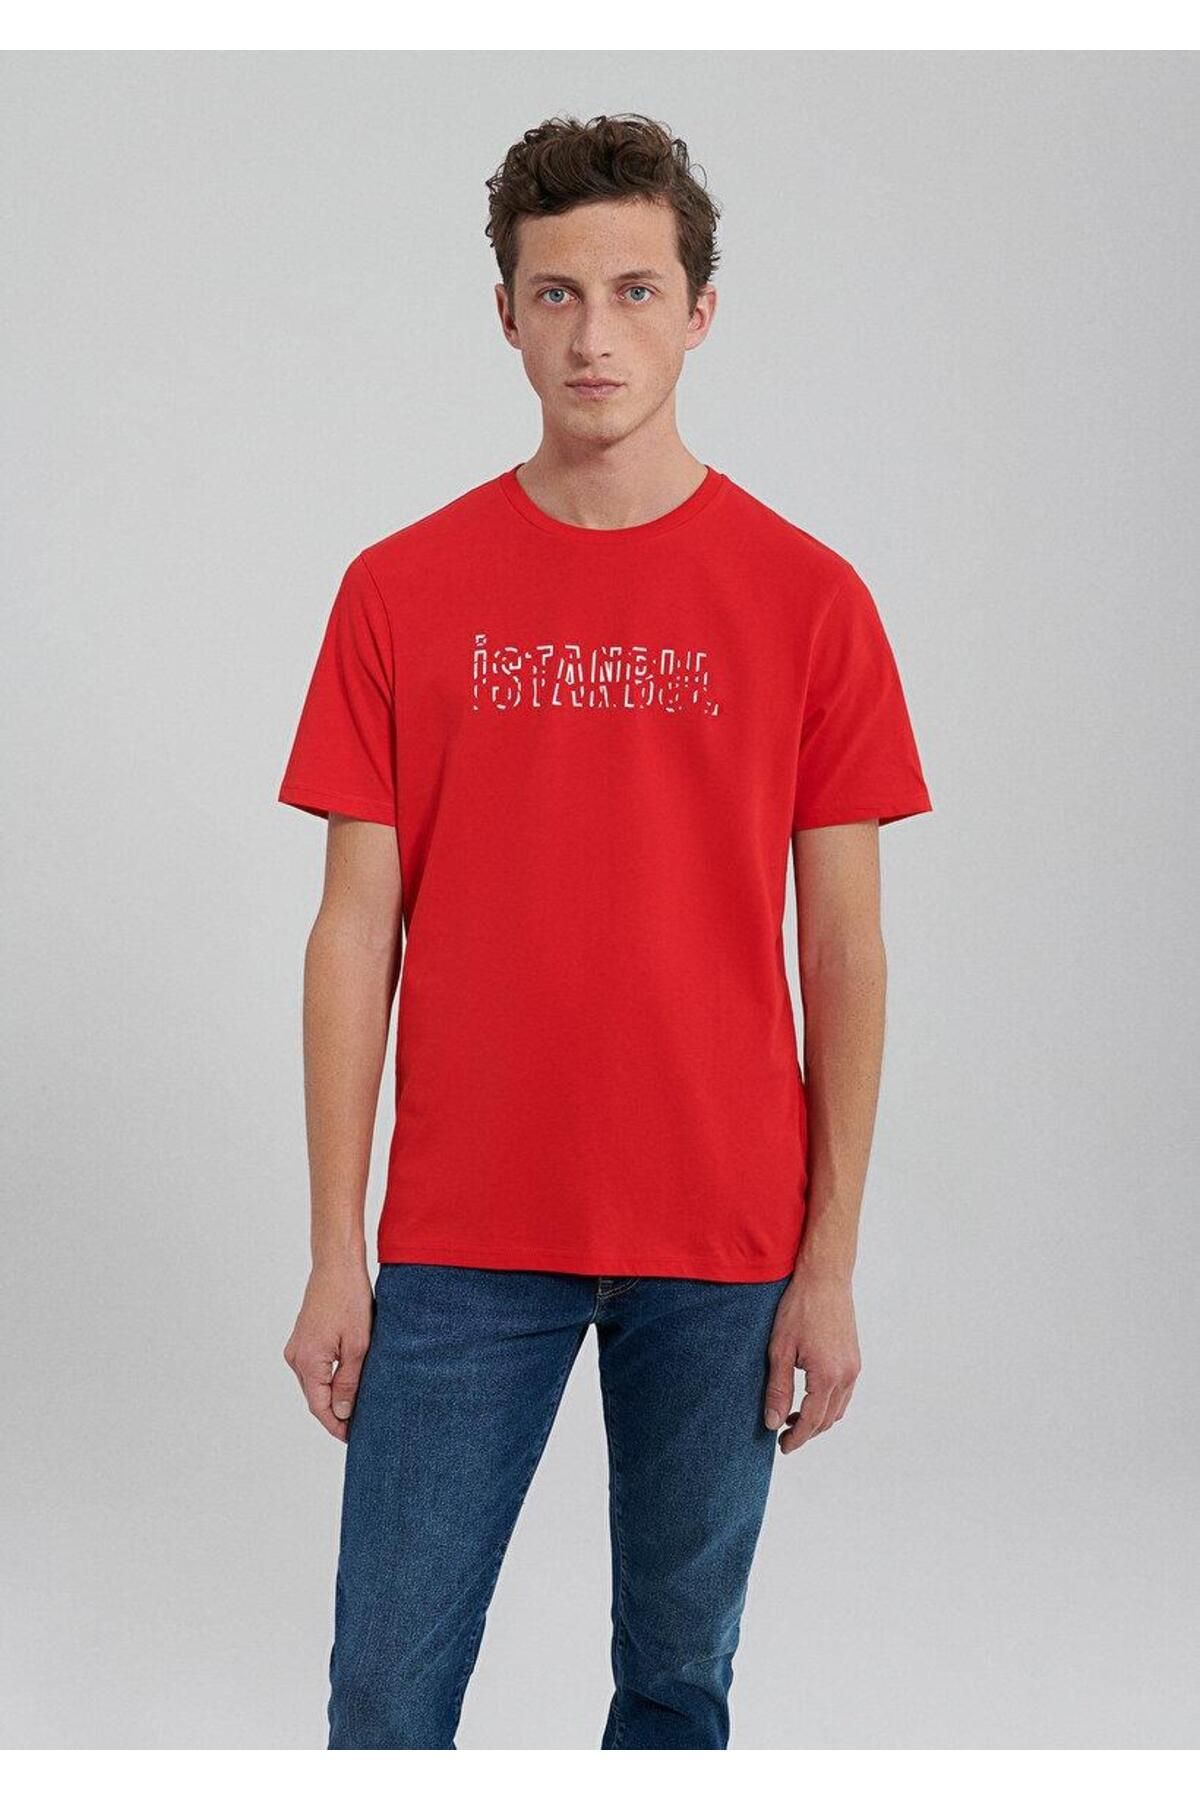 Mavi تی شرت چاپی استانبول مردان آبی قرمز 067115-70471